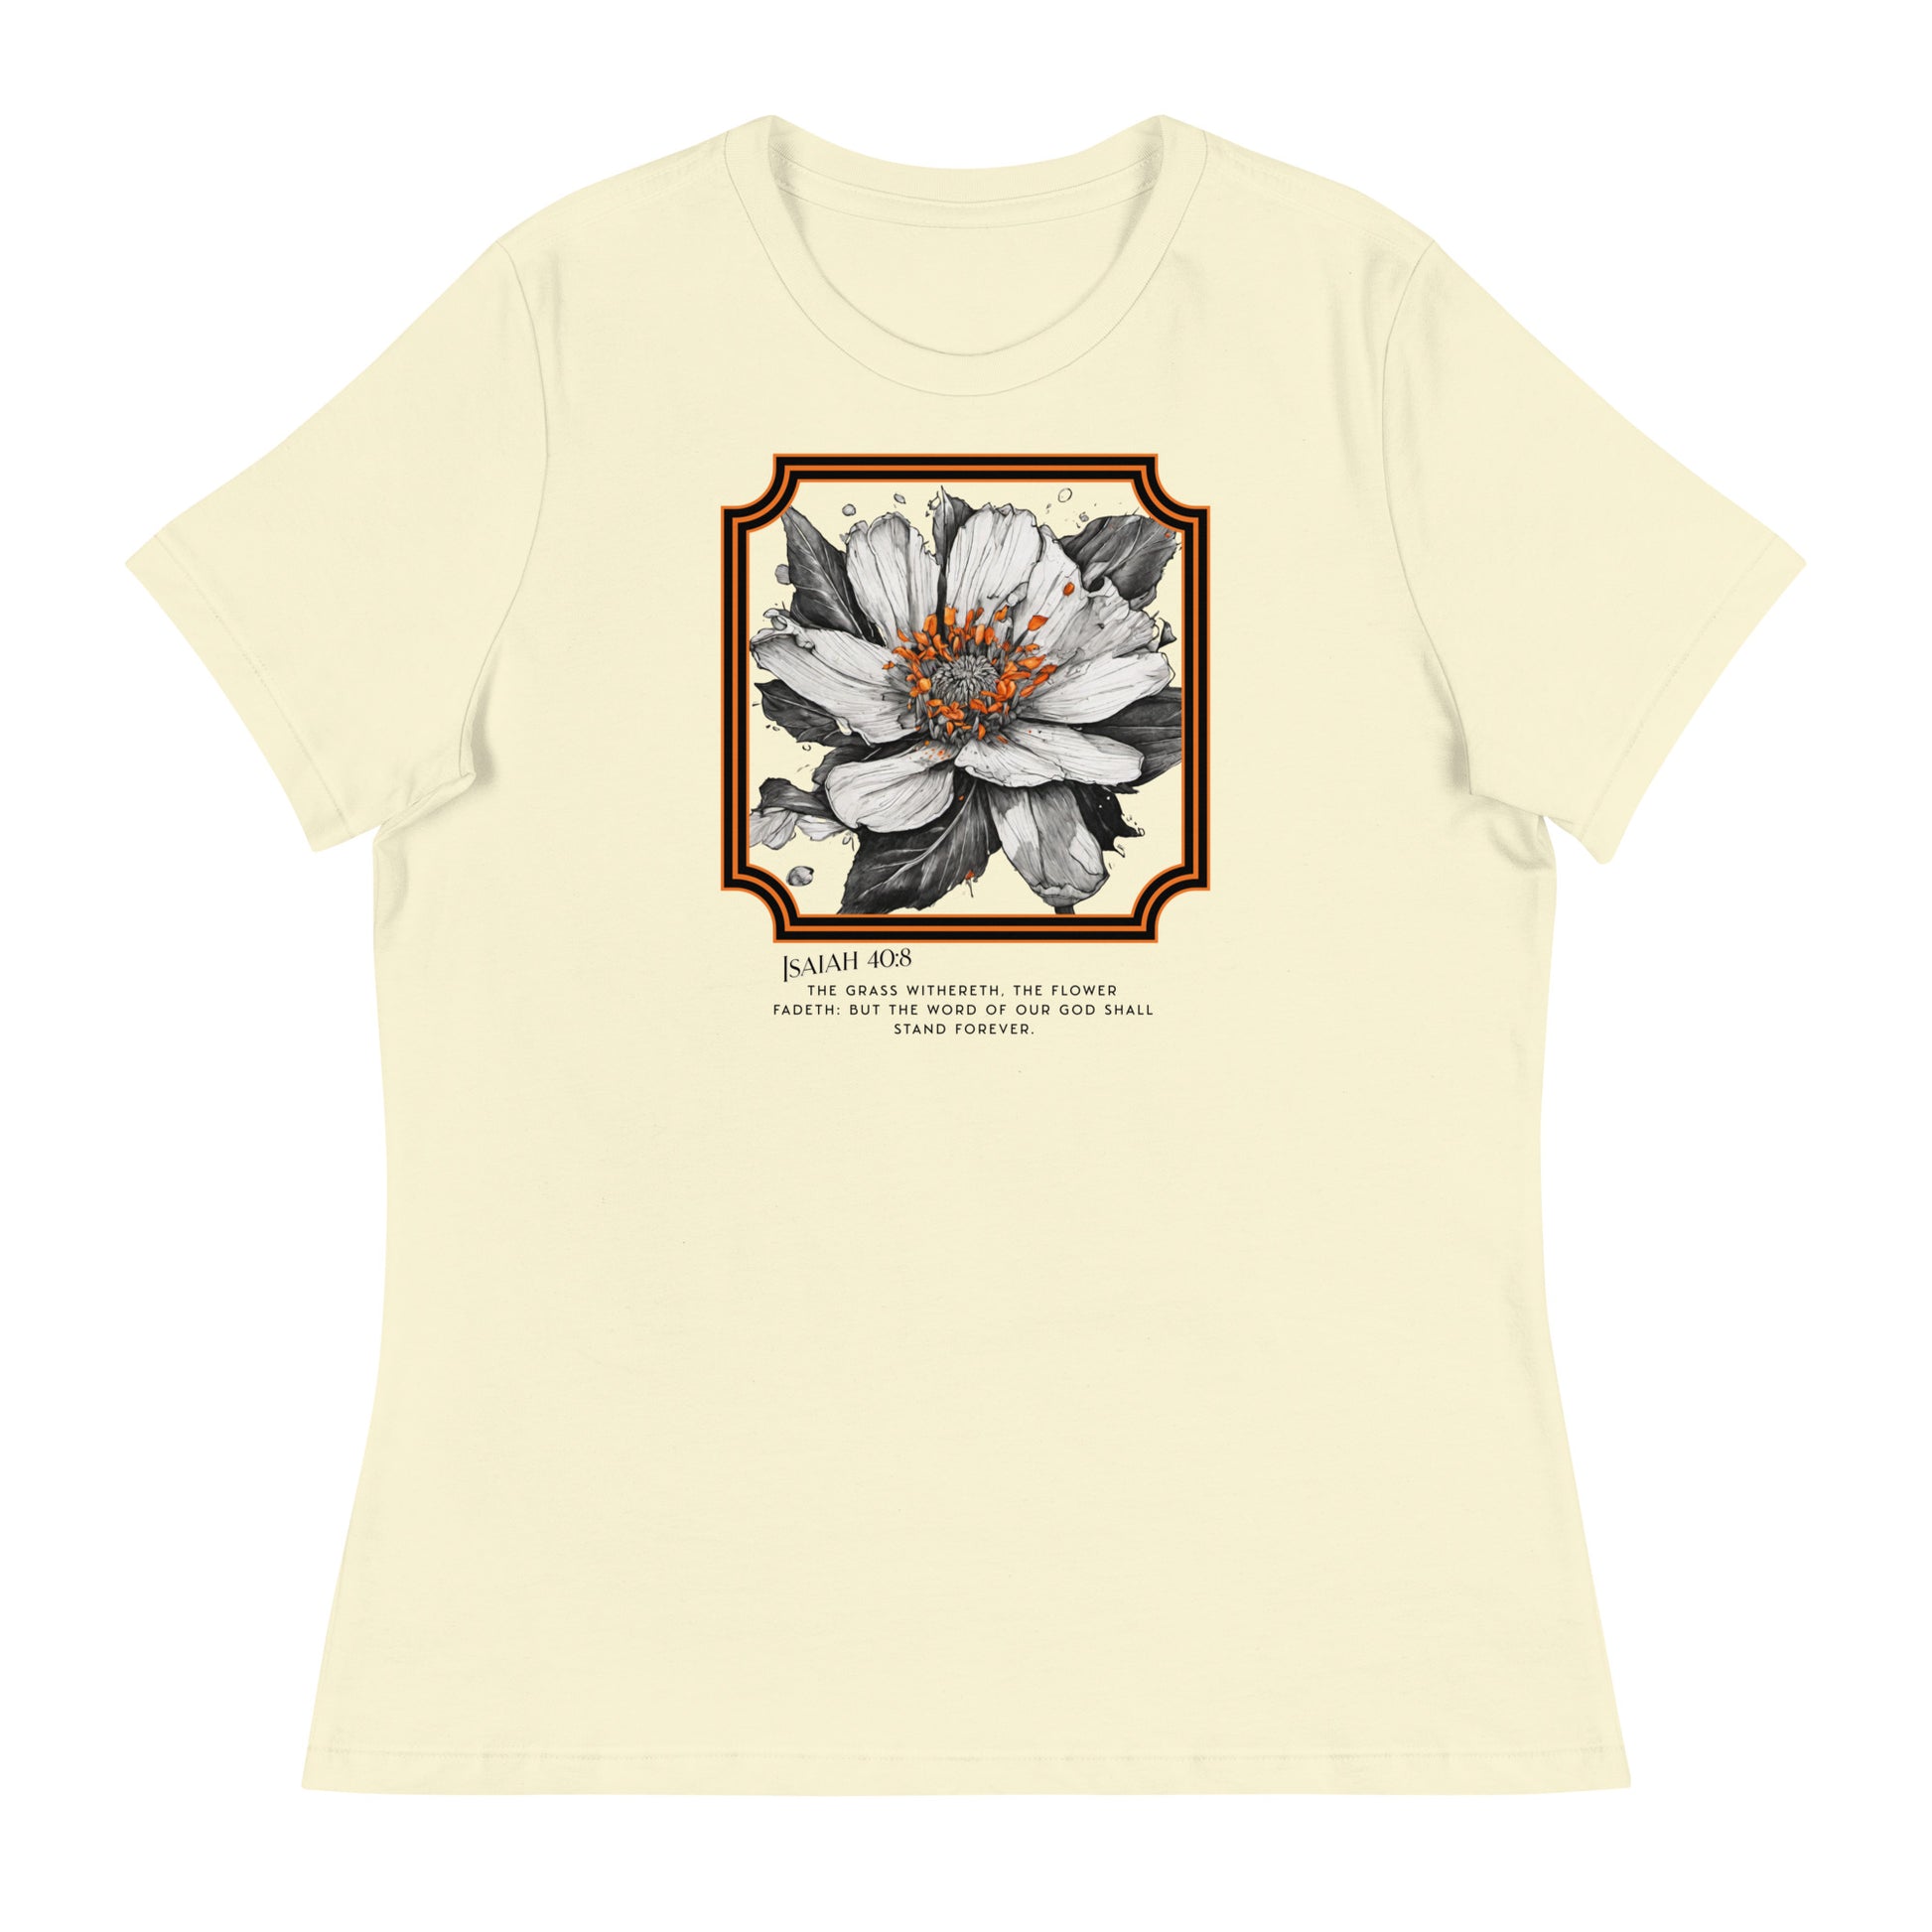 Isaiah 40:8 Flower Fadeth Women's Christian Graphic T-Shirt Citron